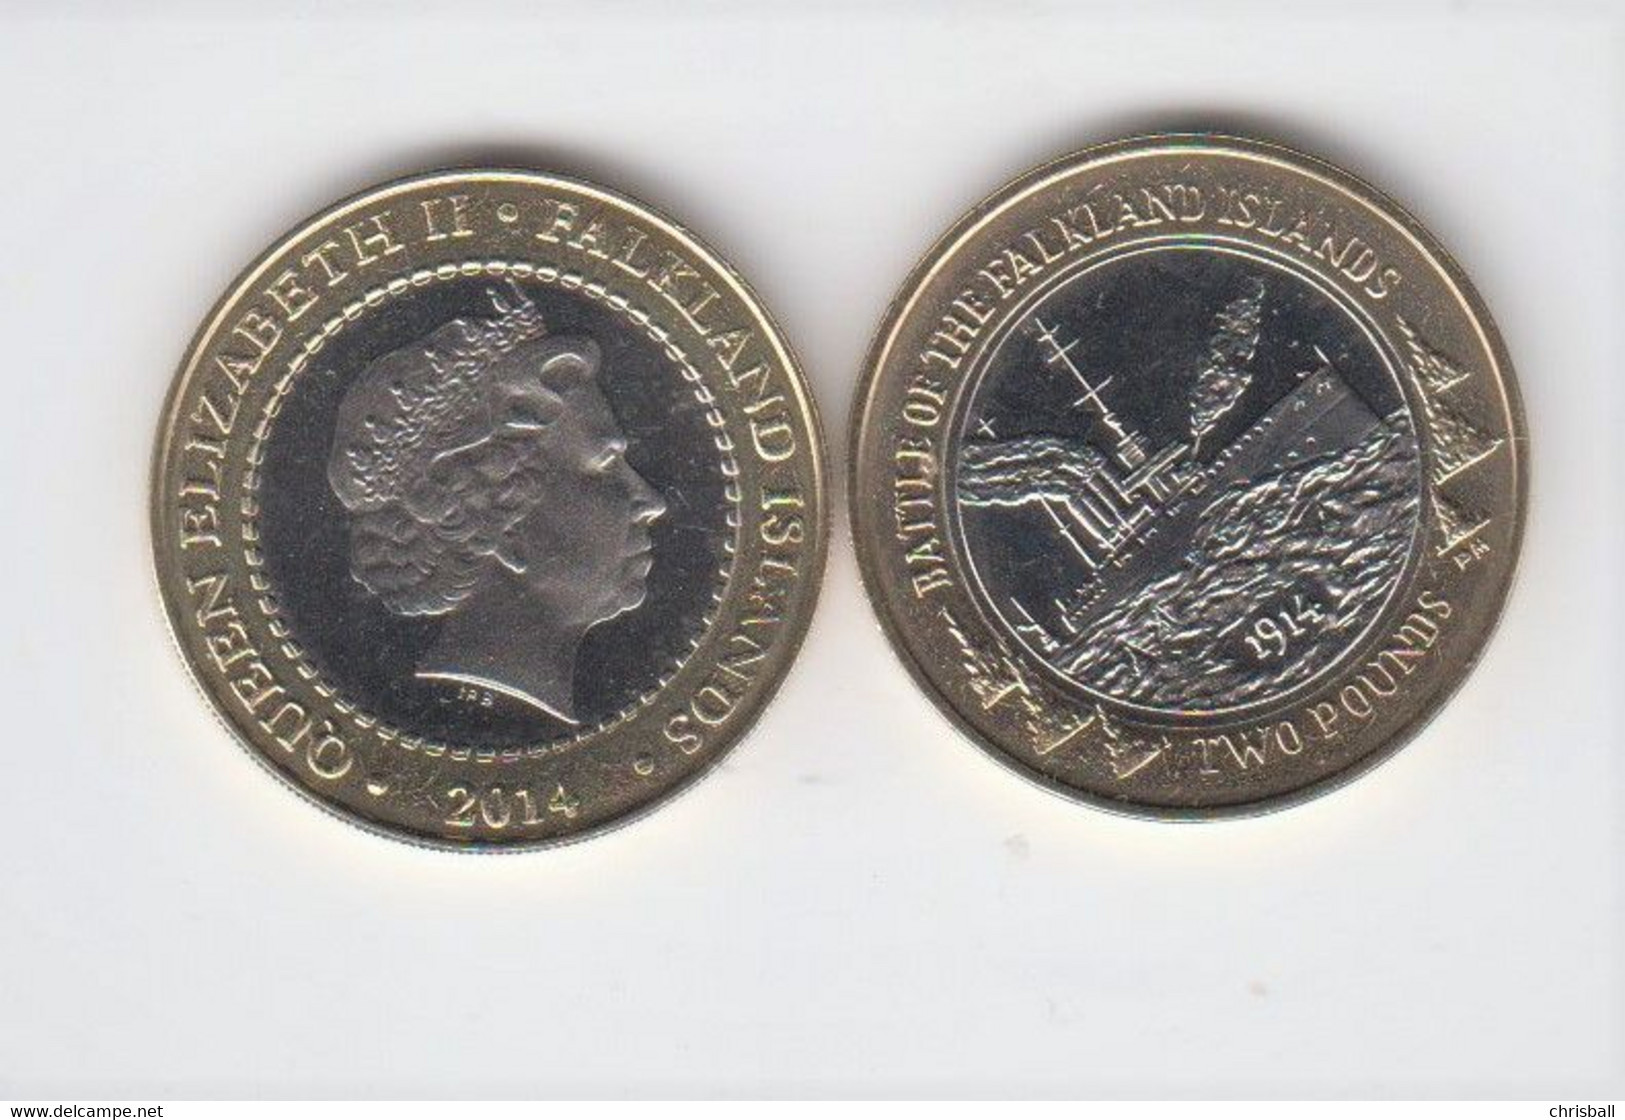 Falkland Island £2 Two Pound Coin - 2014 HMS Glasgow Uncirculated - Malvinas